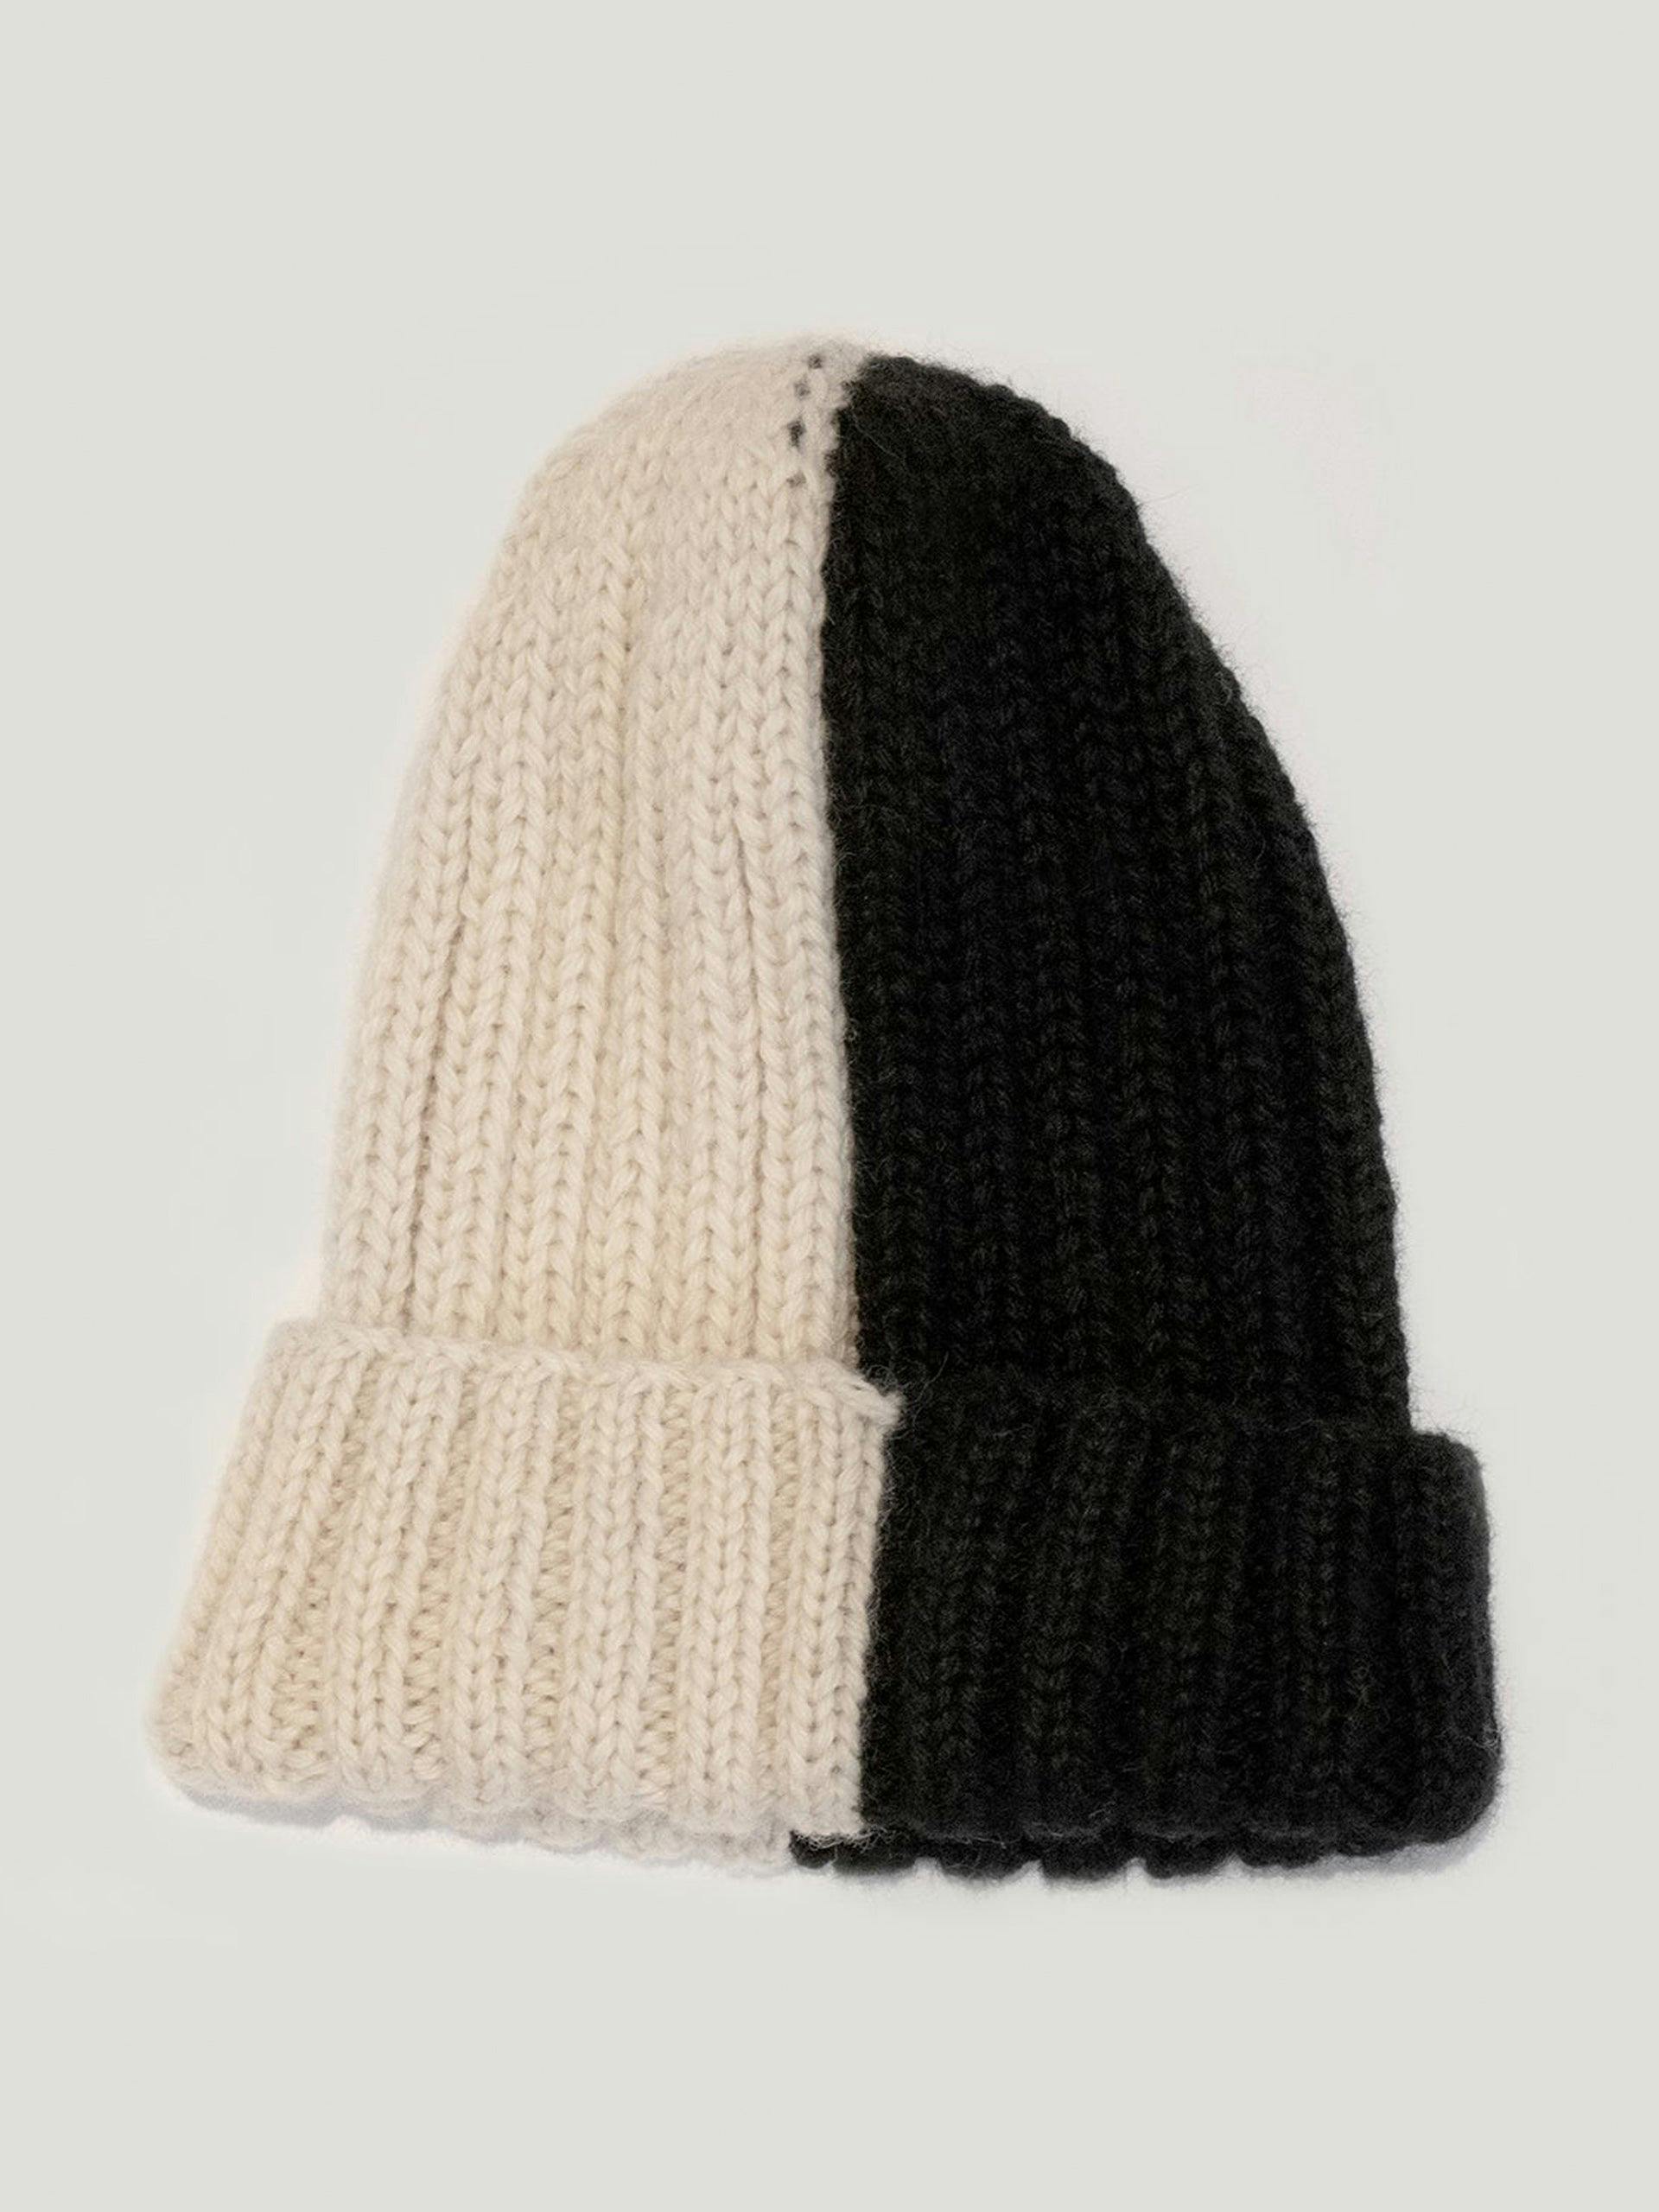 Black and white wool beanie hat